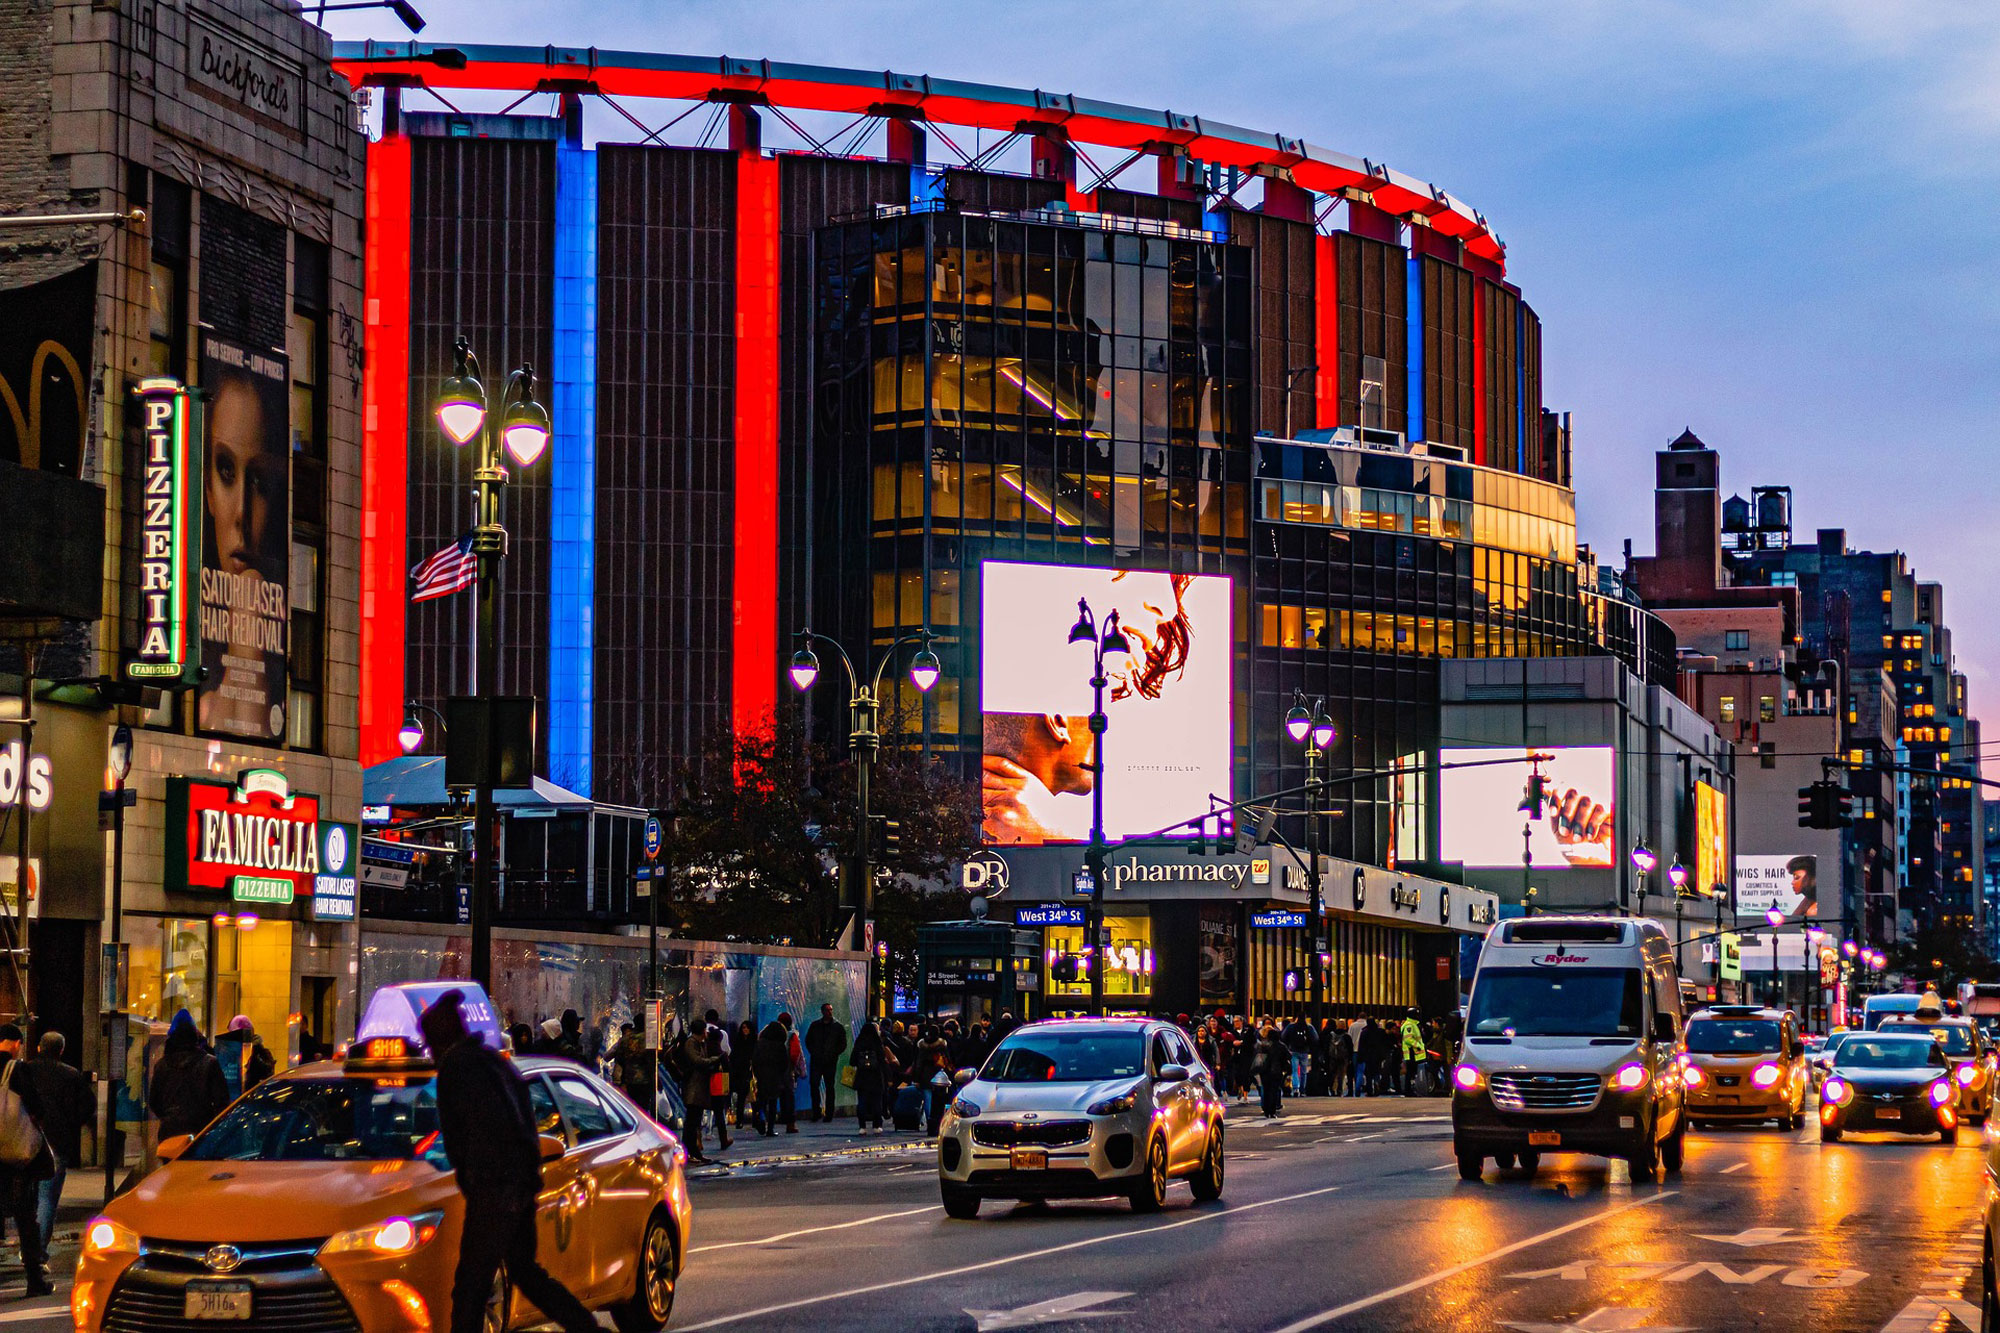 Madison Square Garden – Championship Place